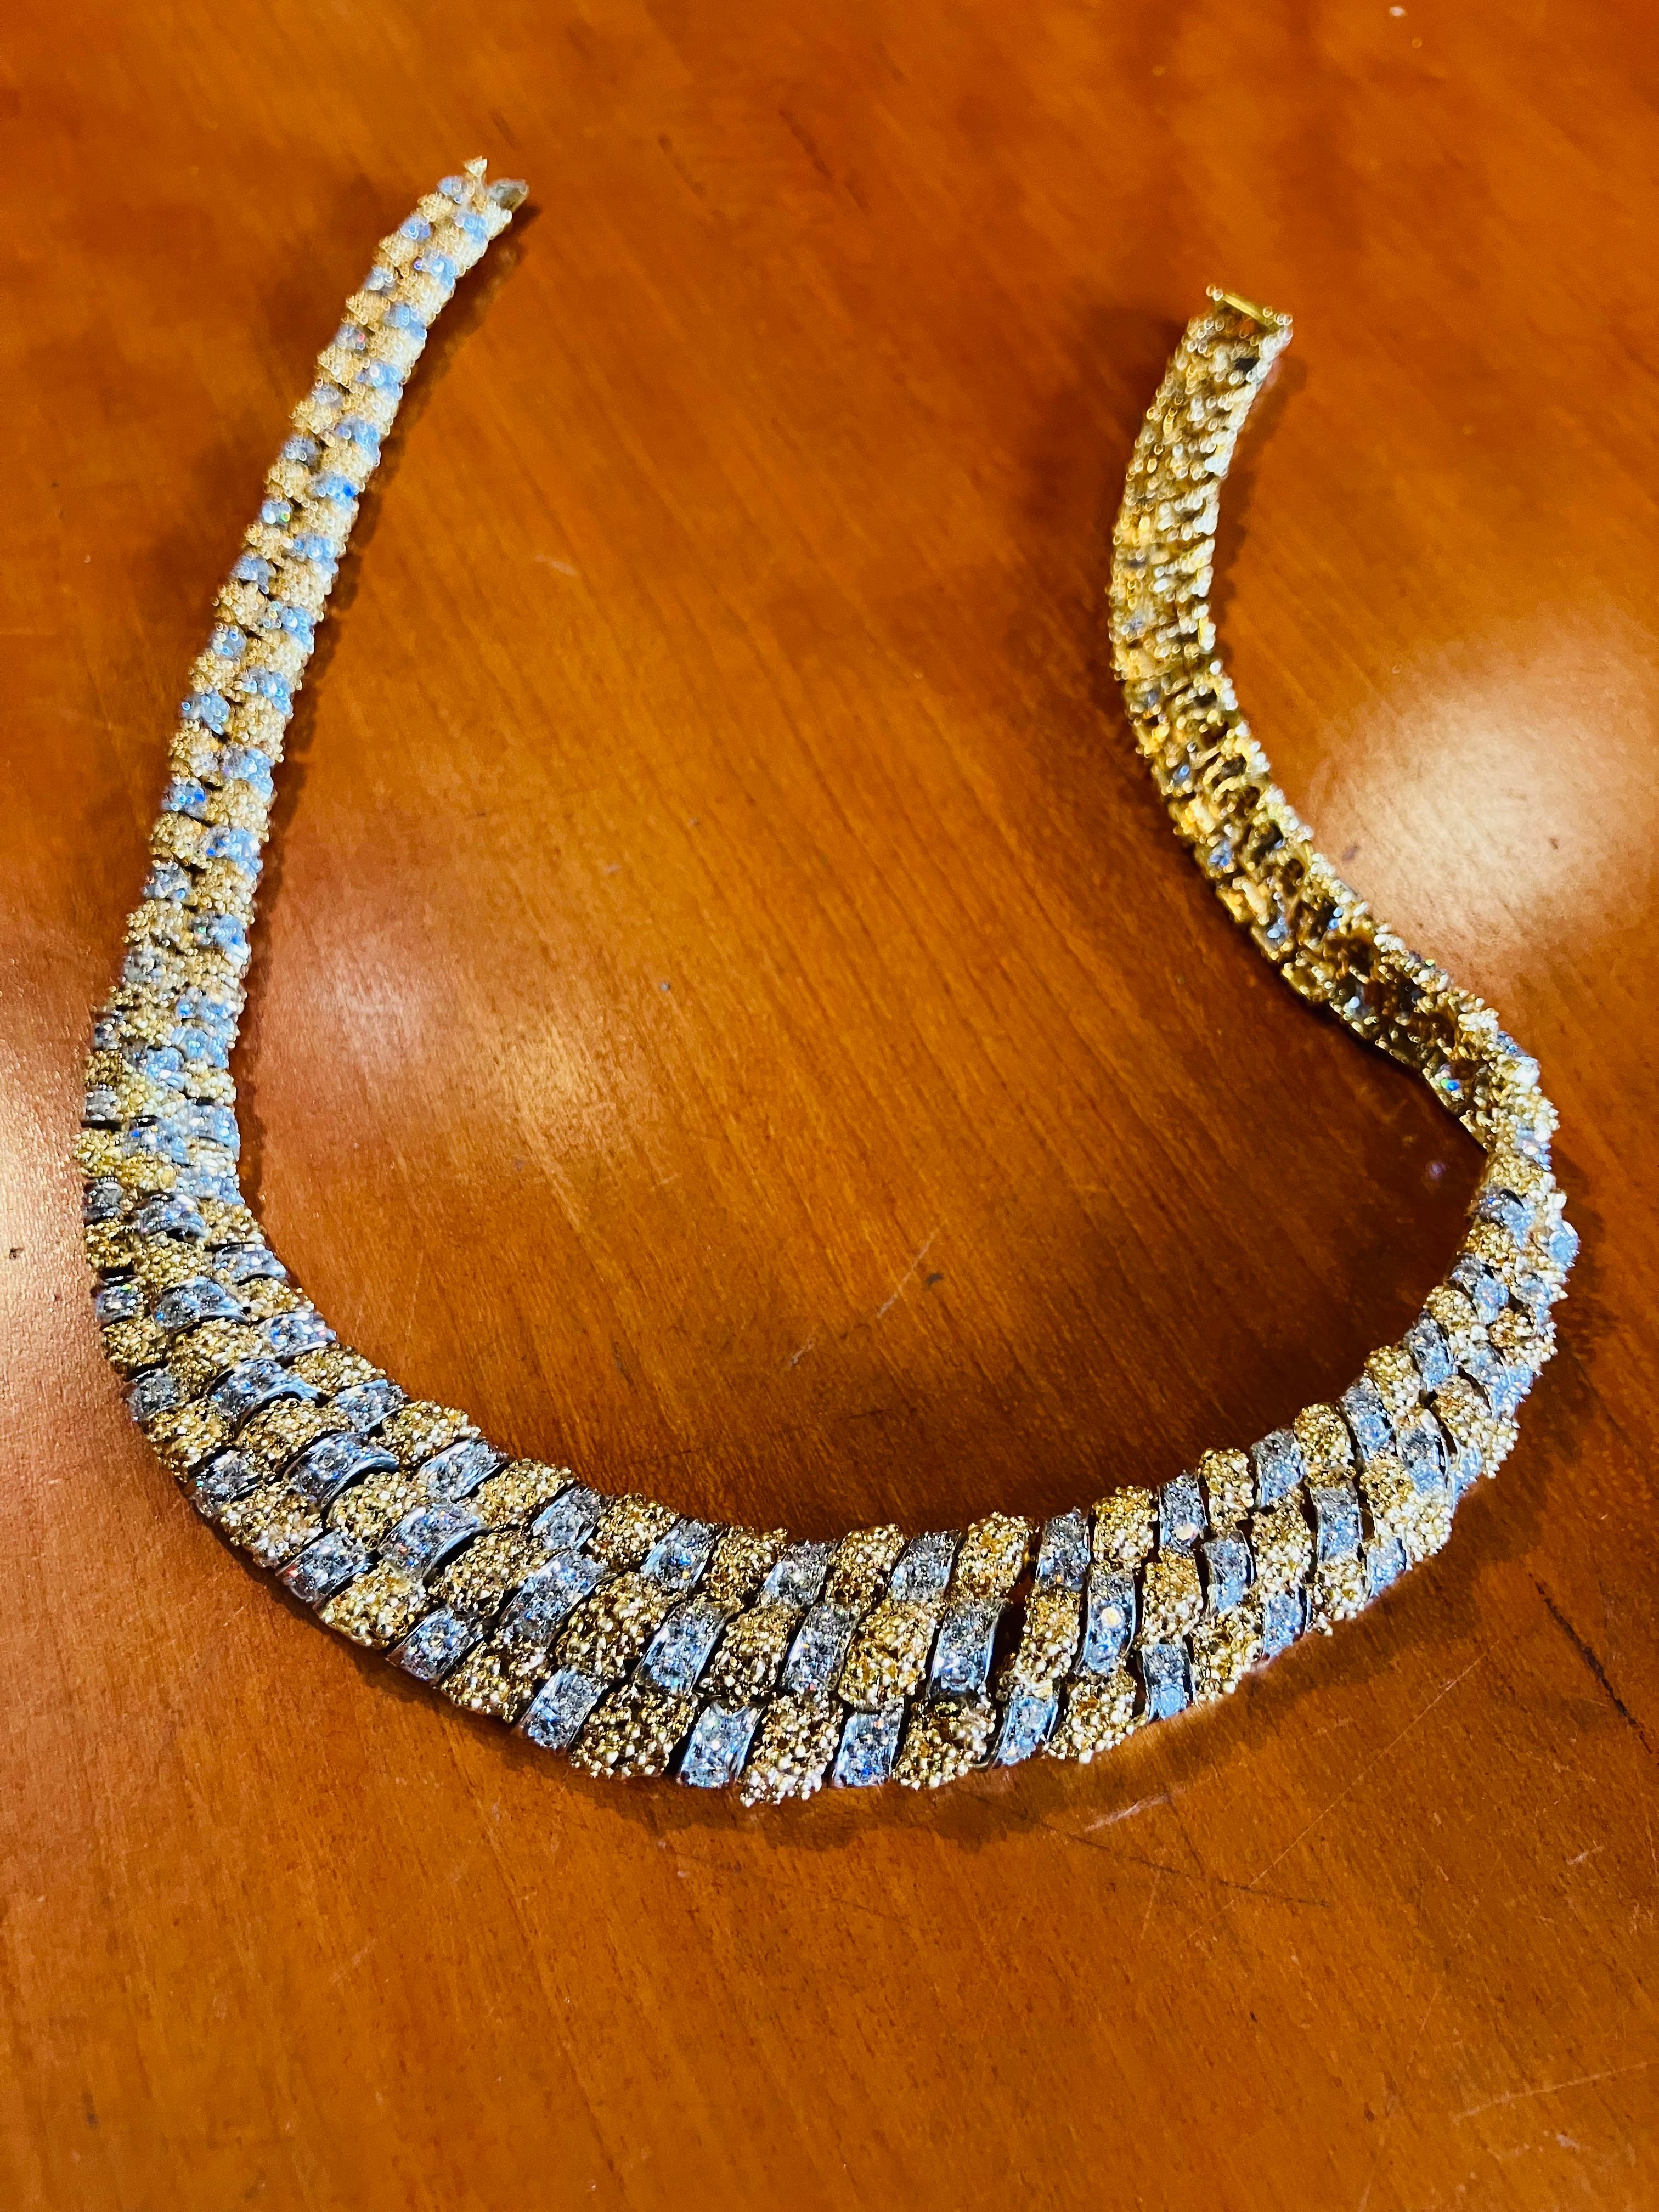 tiffany tennis necklace